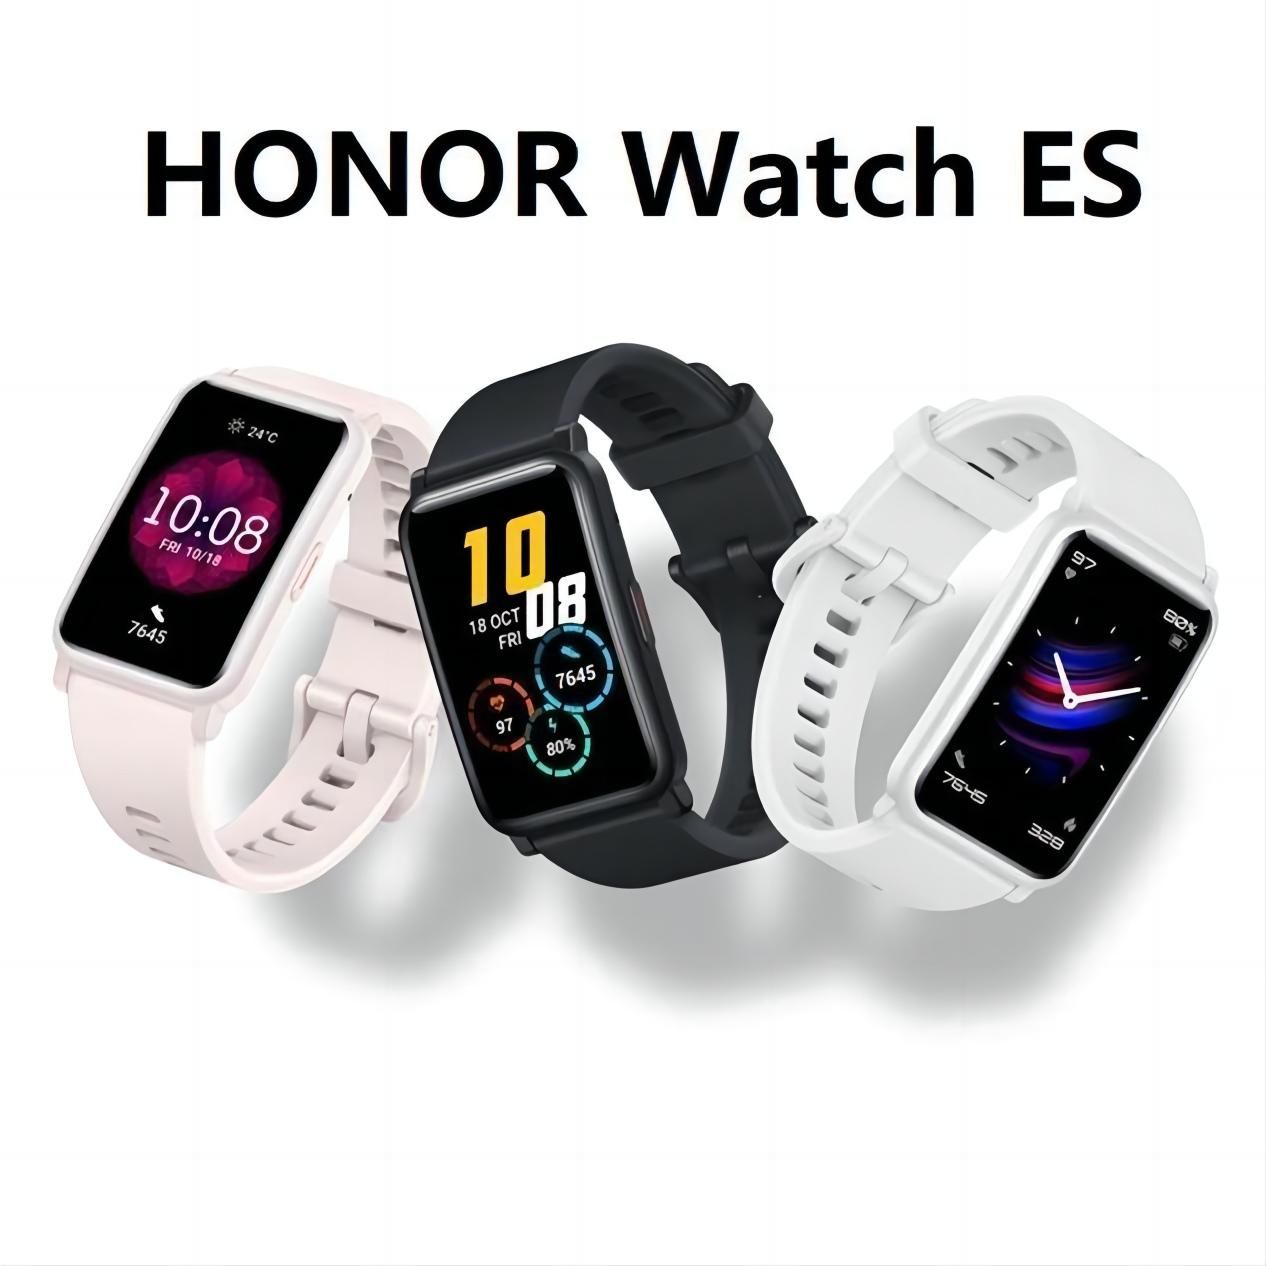 Смарт часы honor es. Honor watch GS Pro. Хонор вотч es. Смарт-часы Honor watch es White (hes-b39). Huawei Honor watch GS Pro Screen 1.39".